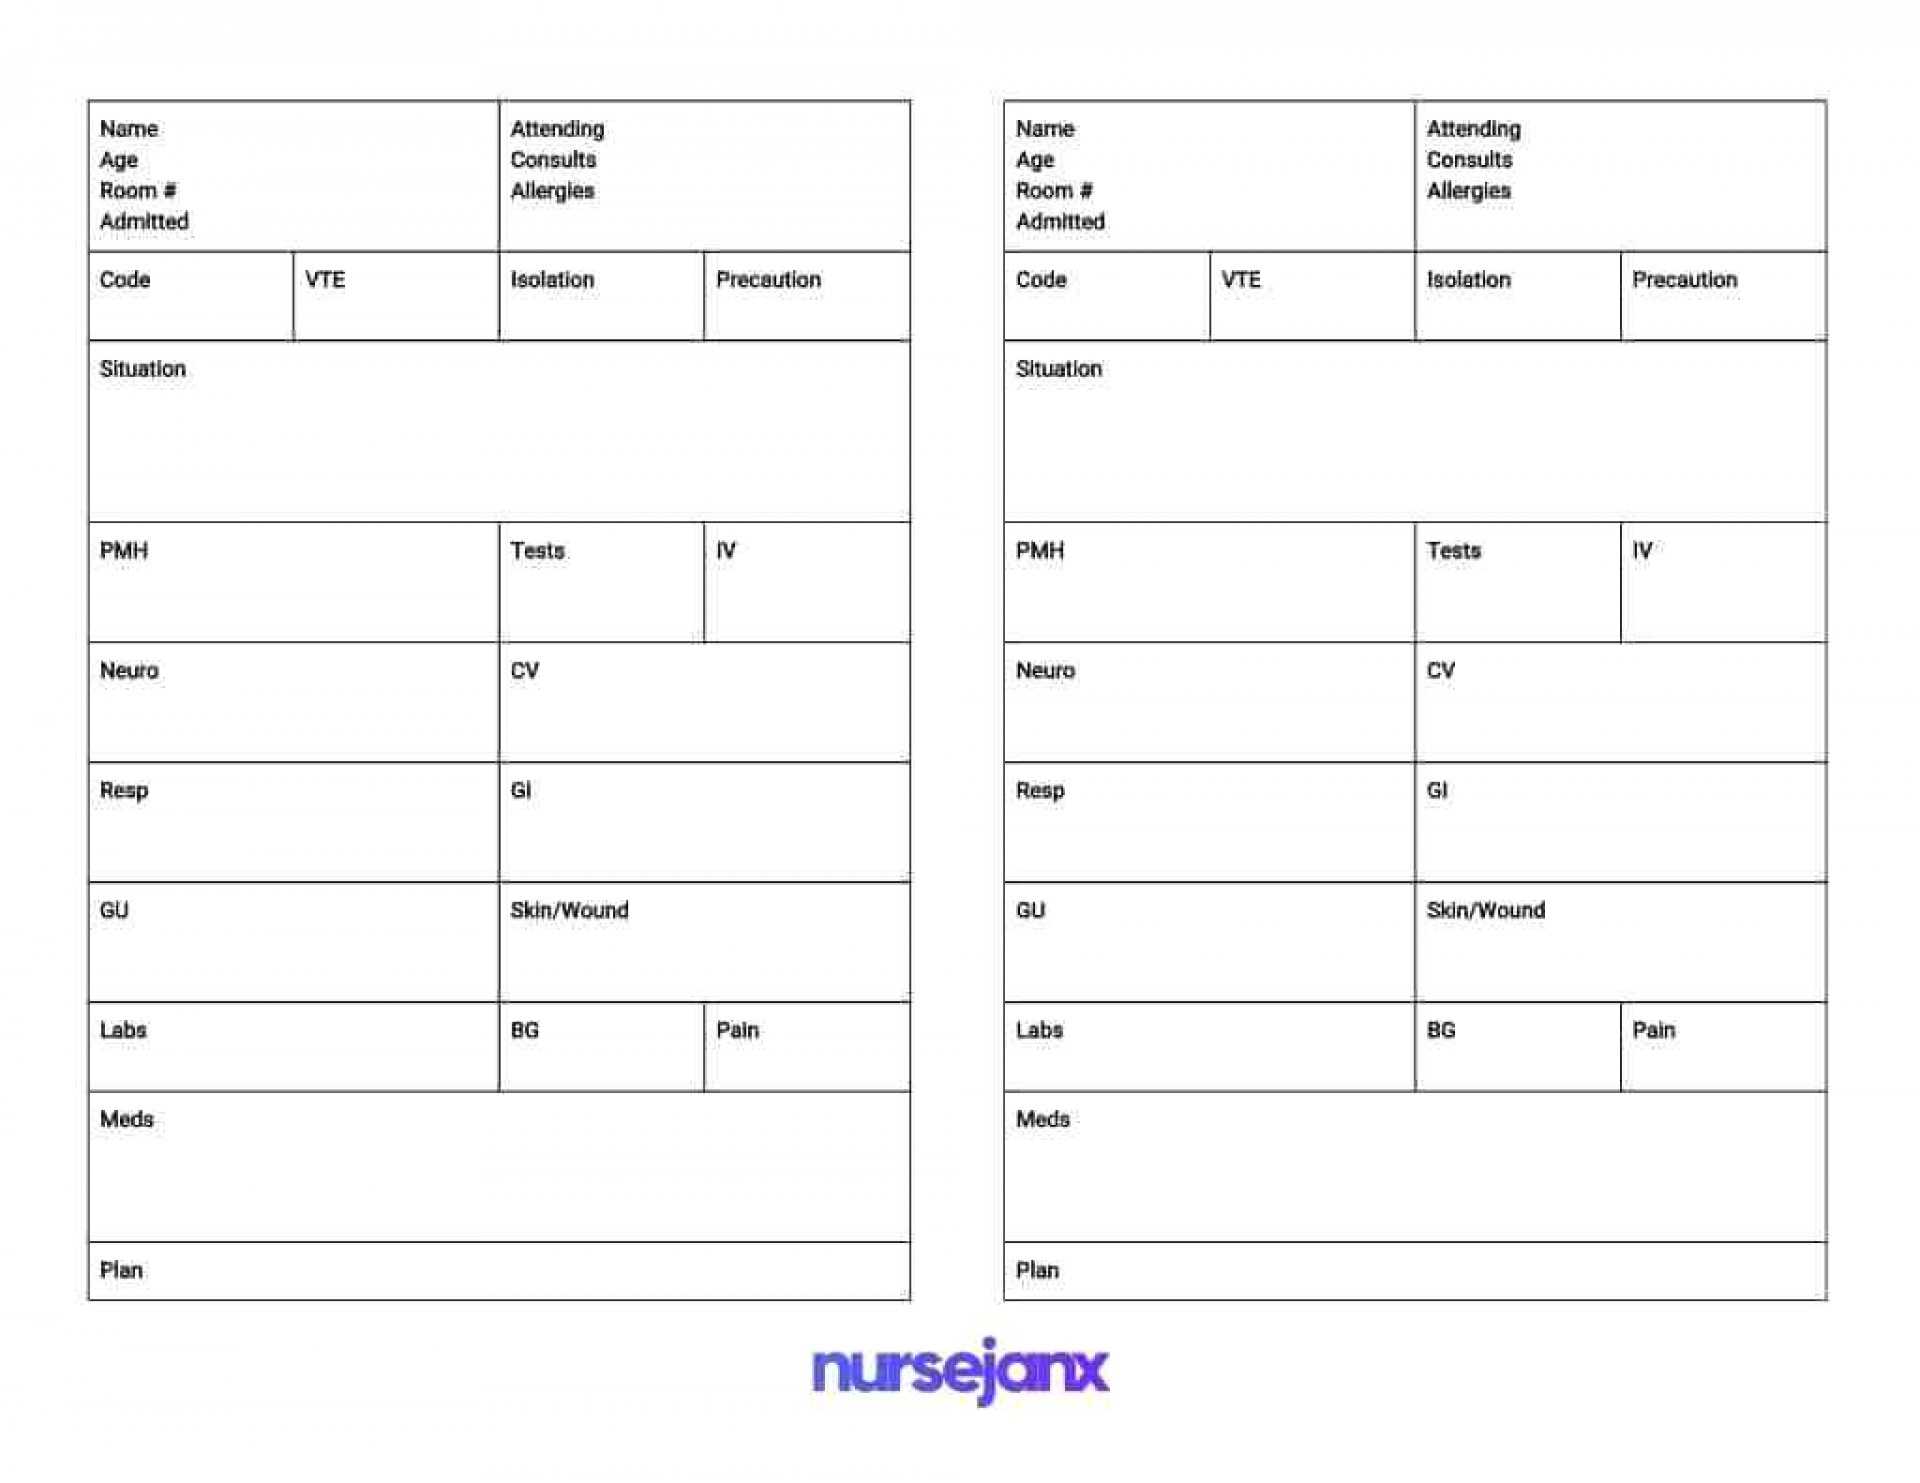 023 Table1 Nursing Shift Report Template Unforgettable Ideas For Shift Report Template